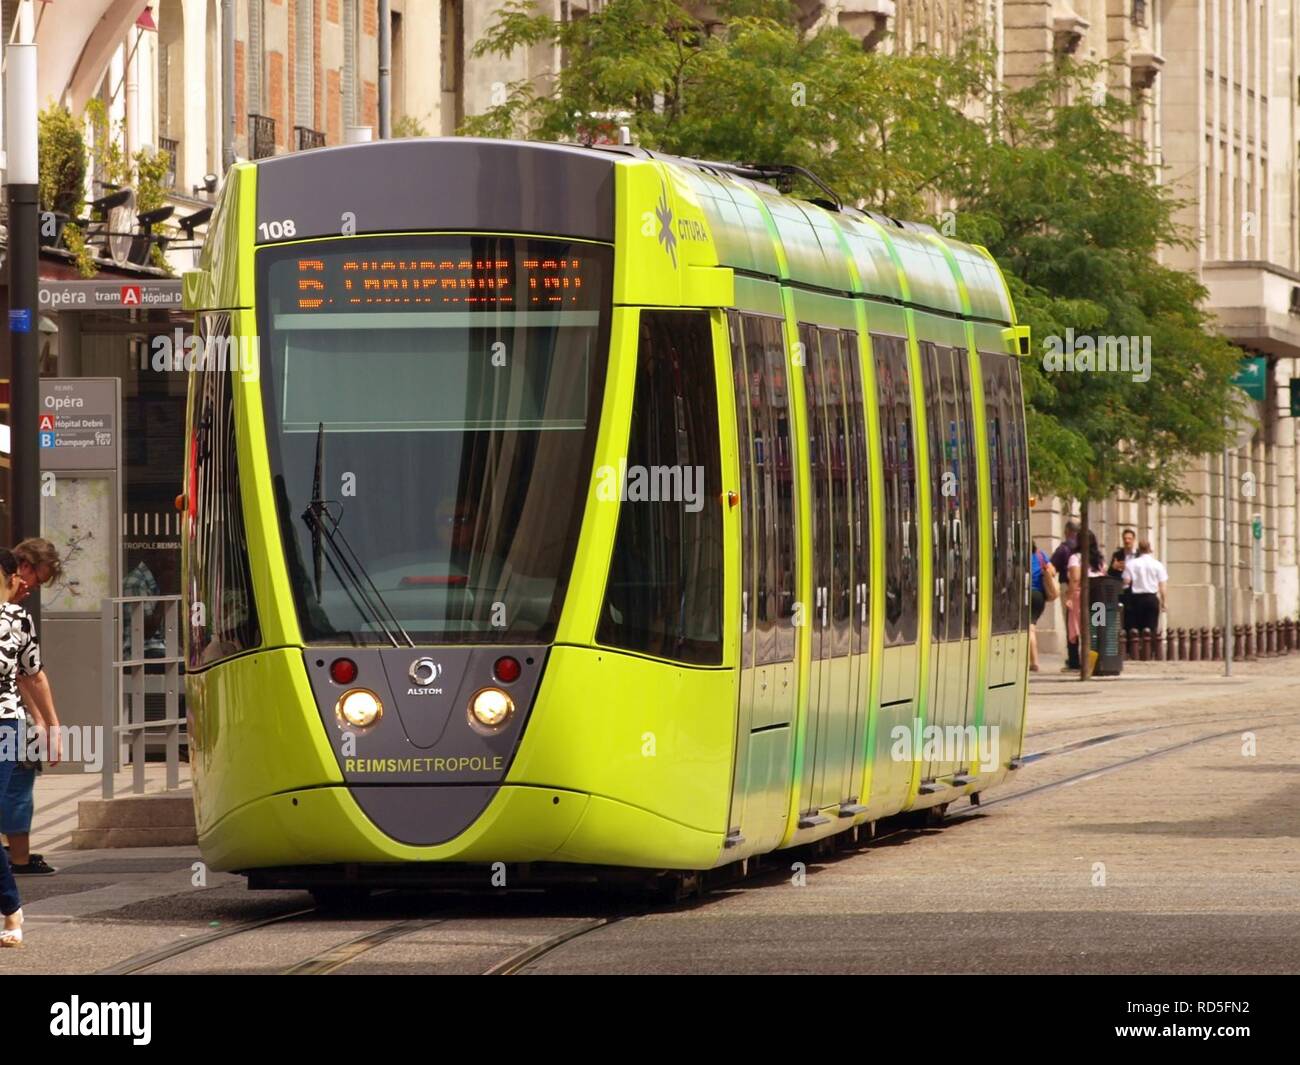 Alstom tram green wagon 108 of the Reimsmetropole. Stock Photo